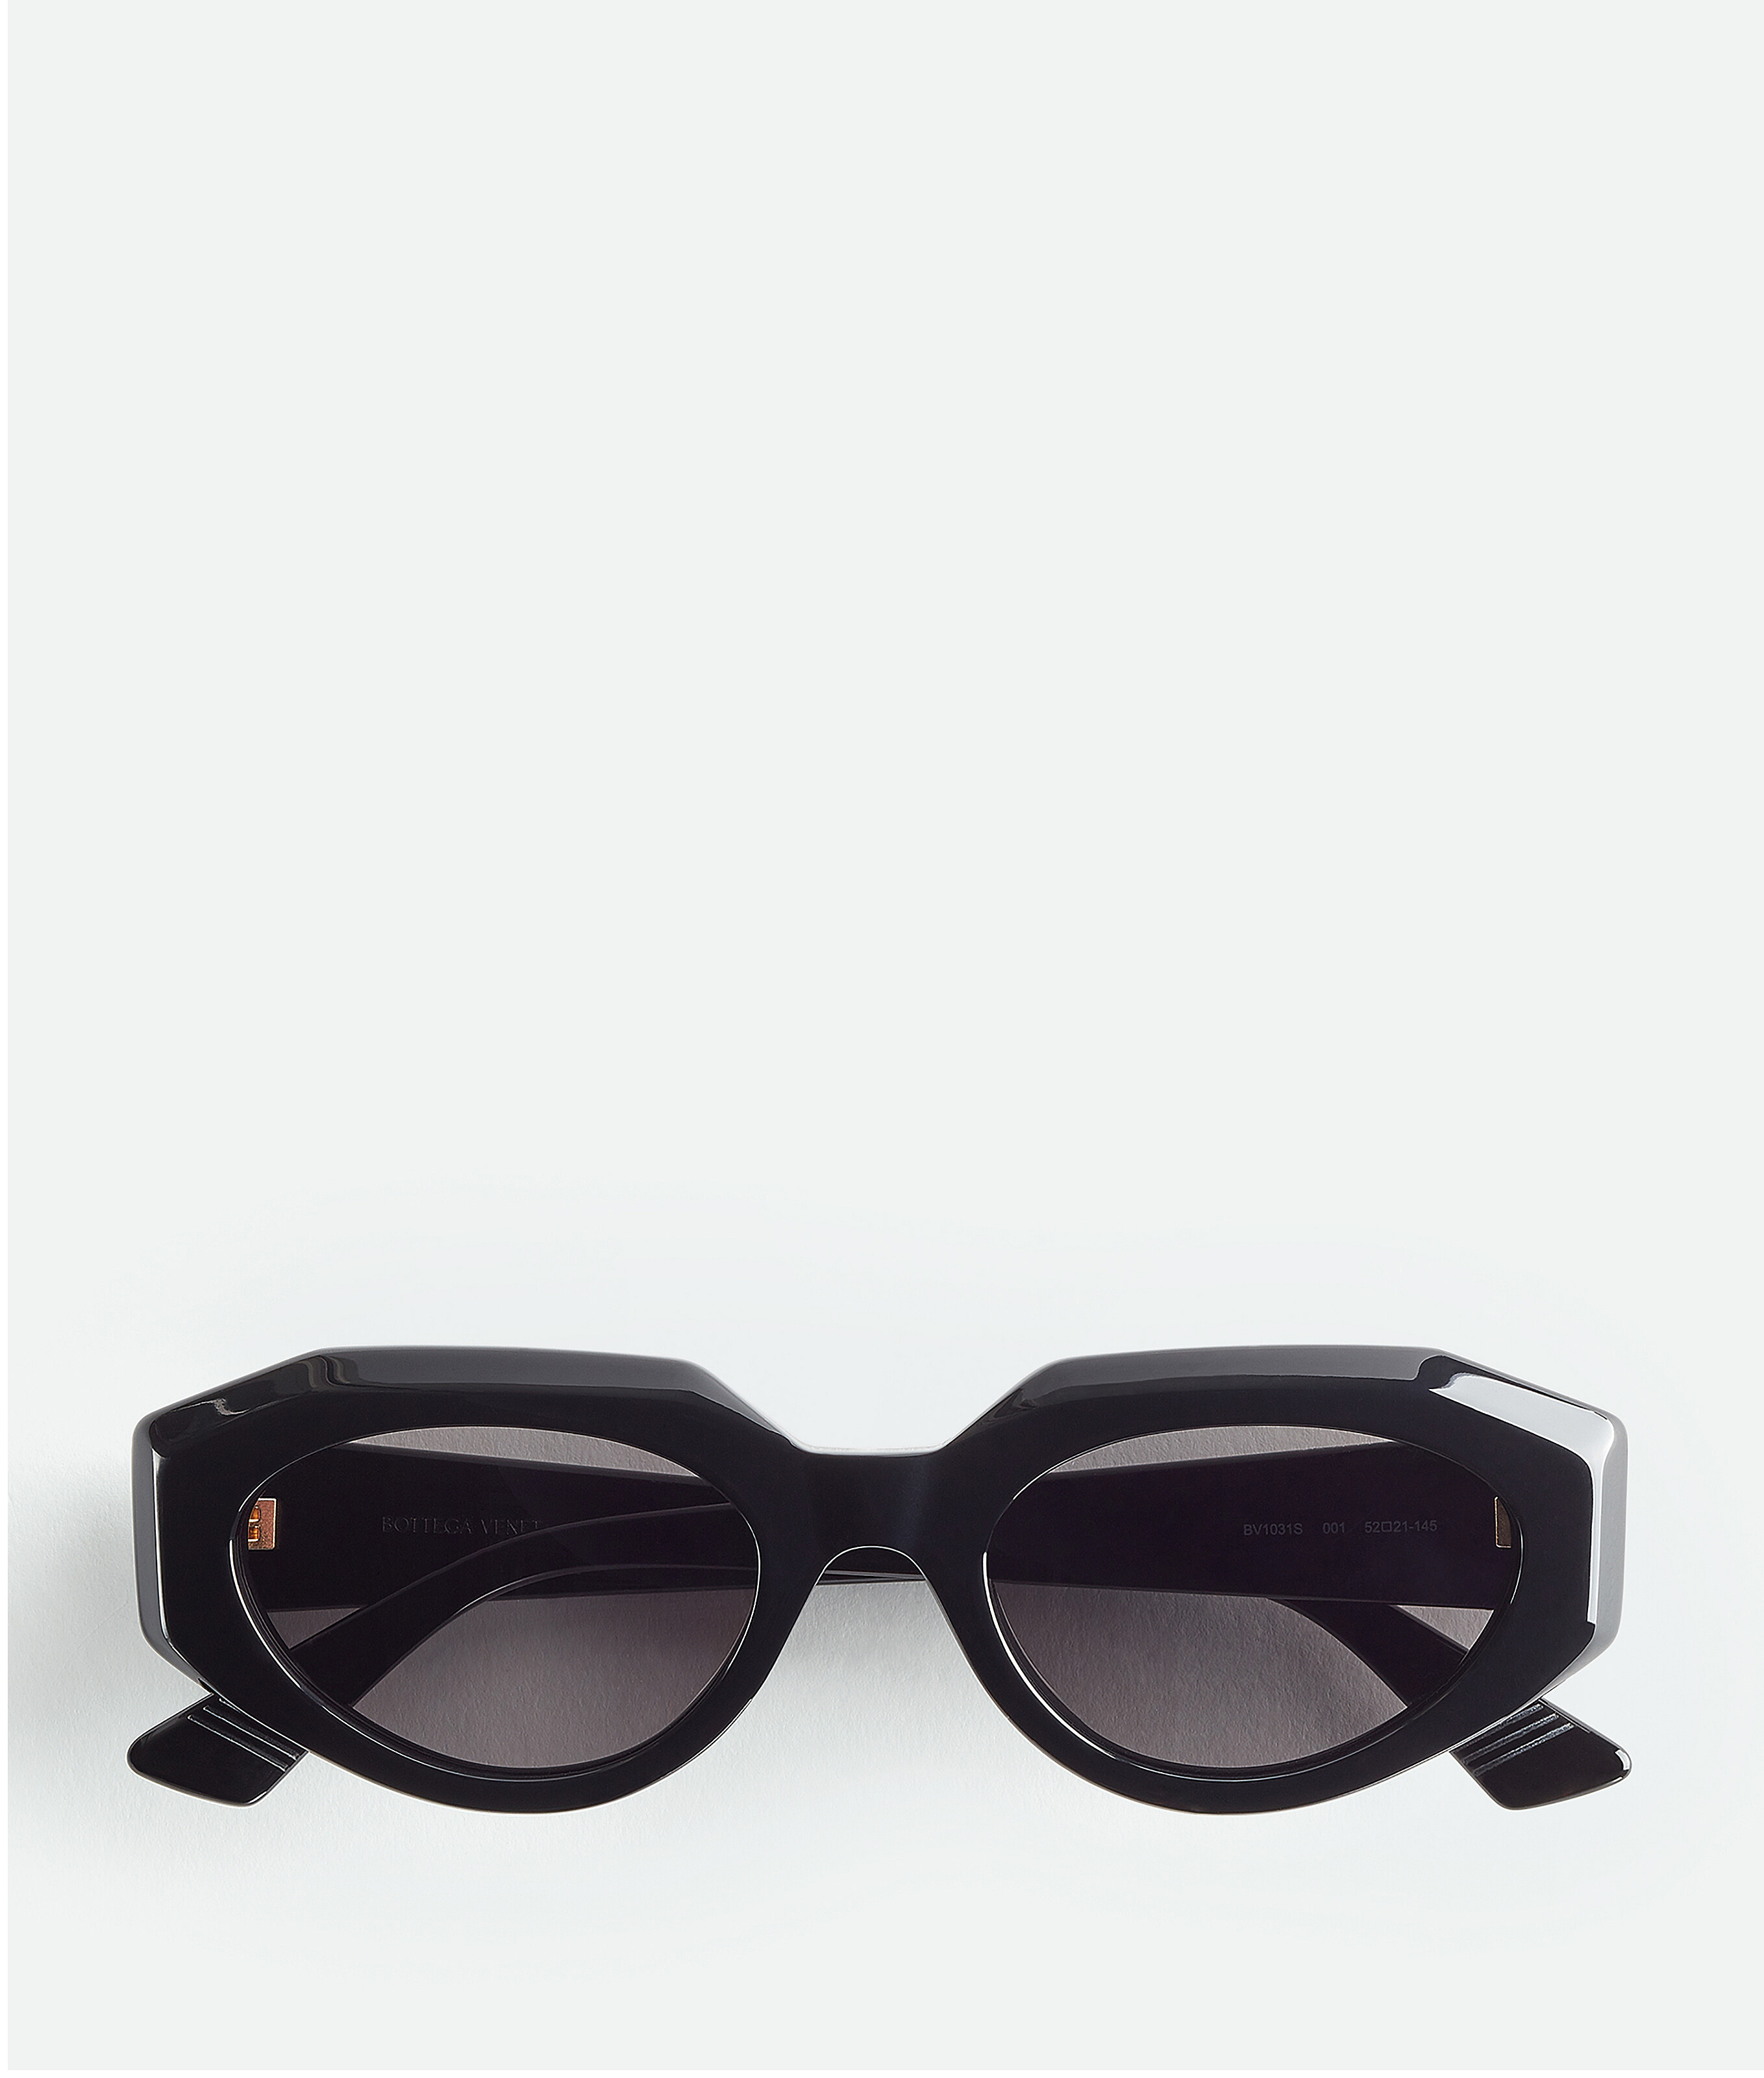 pijn bestuurder Rusland Bottega Veneta® Women's Facet Acetate Cat Eye Sunglasses in Black / Grey.  Shop online now.